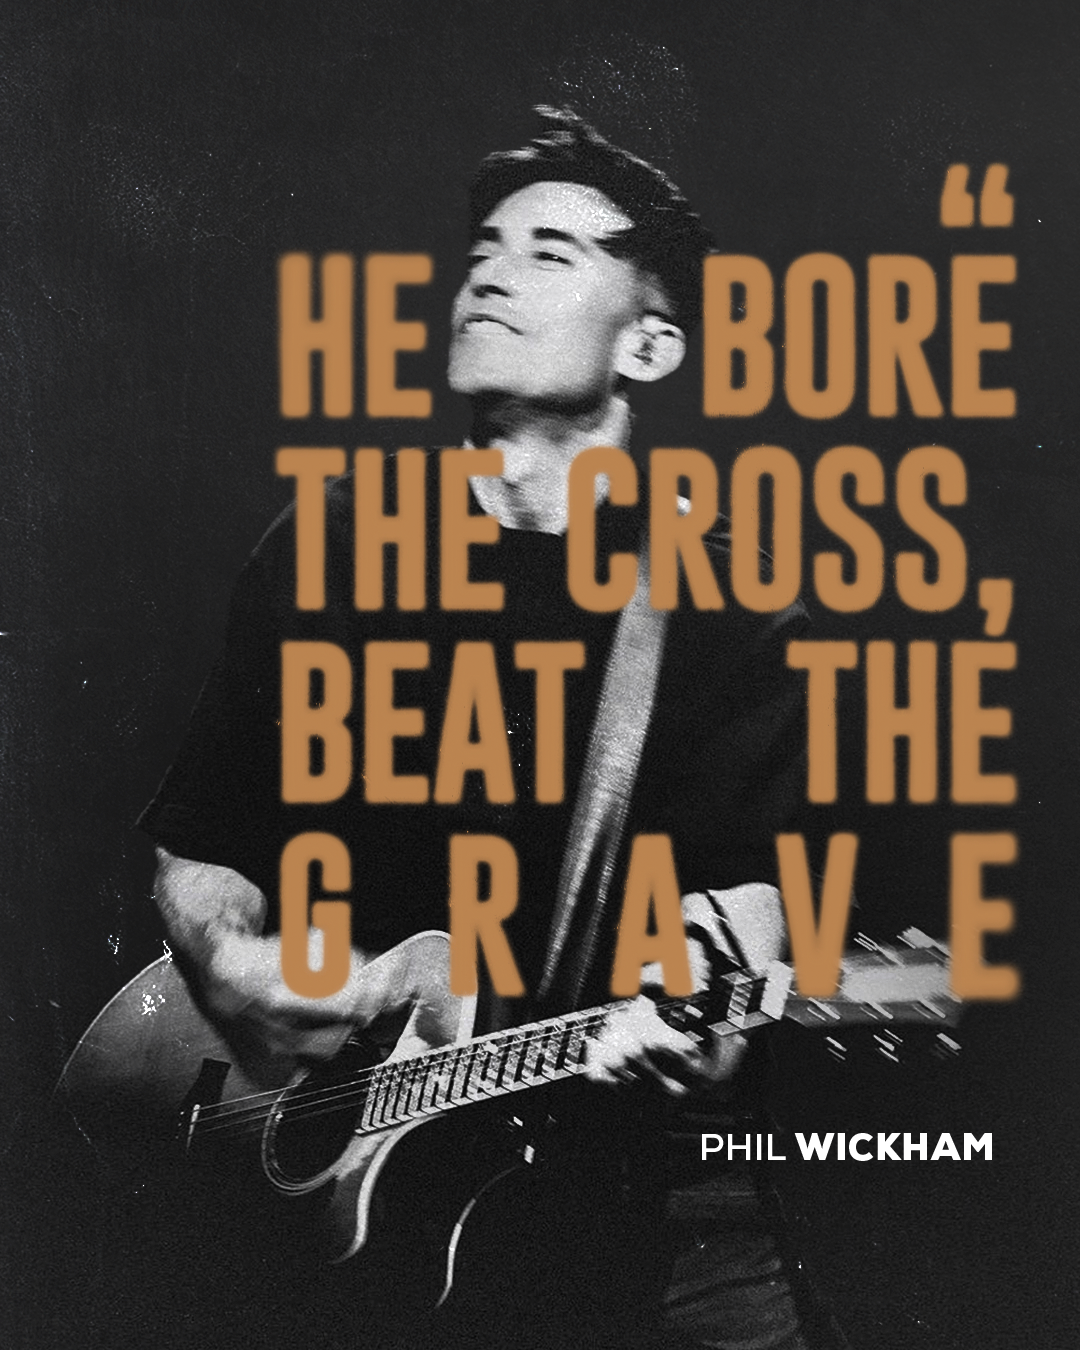 He Bore The Cross Beat the Grave Phil Wickham